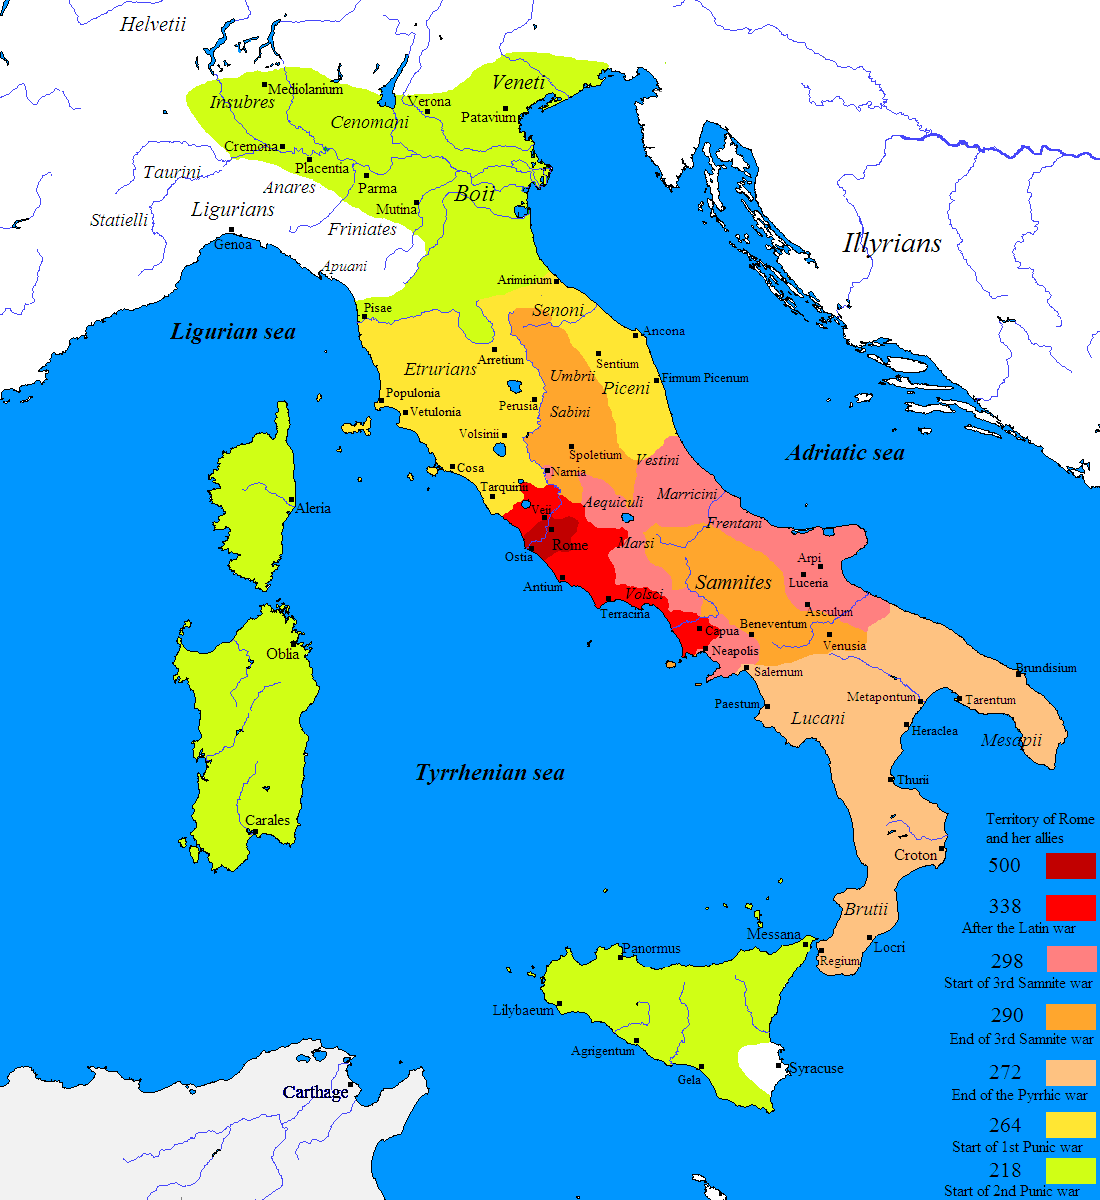 La conquista romana de Italia (500 a.C. – 218 a.C)